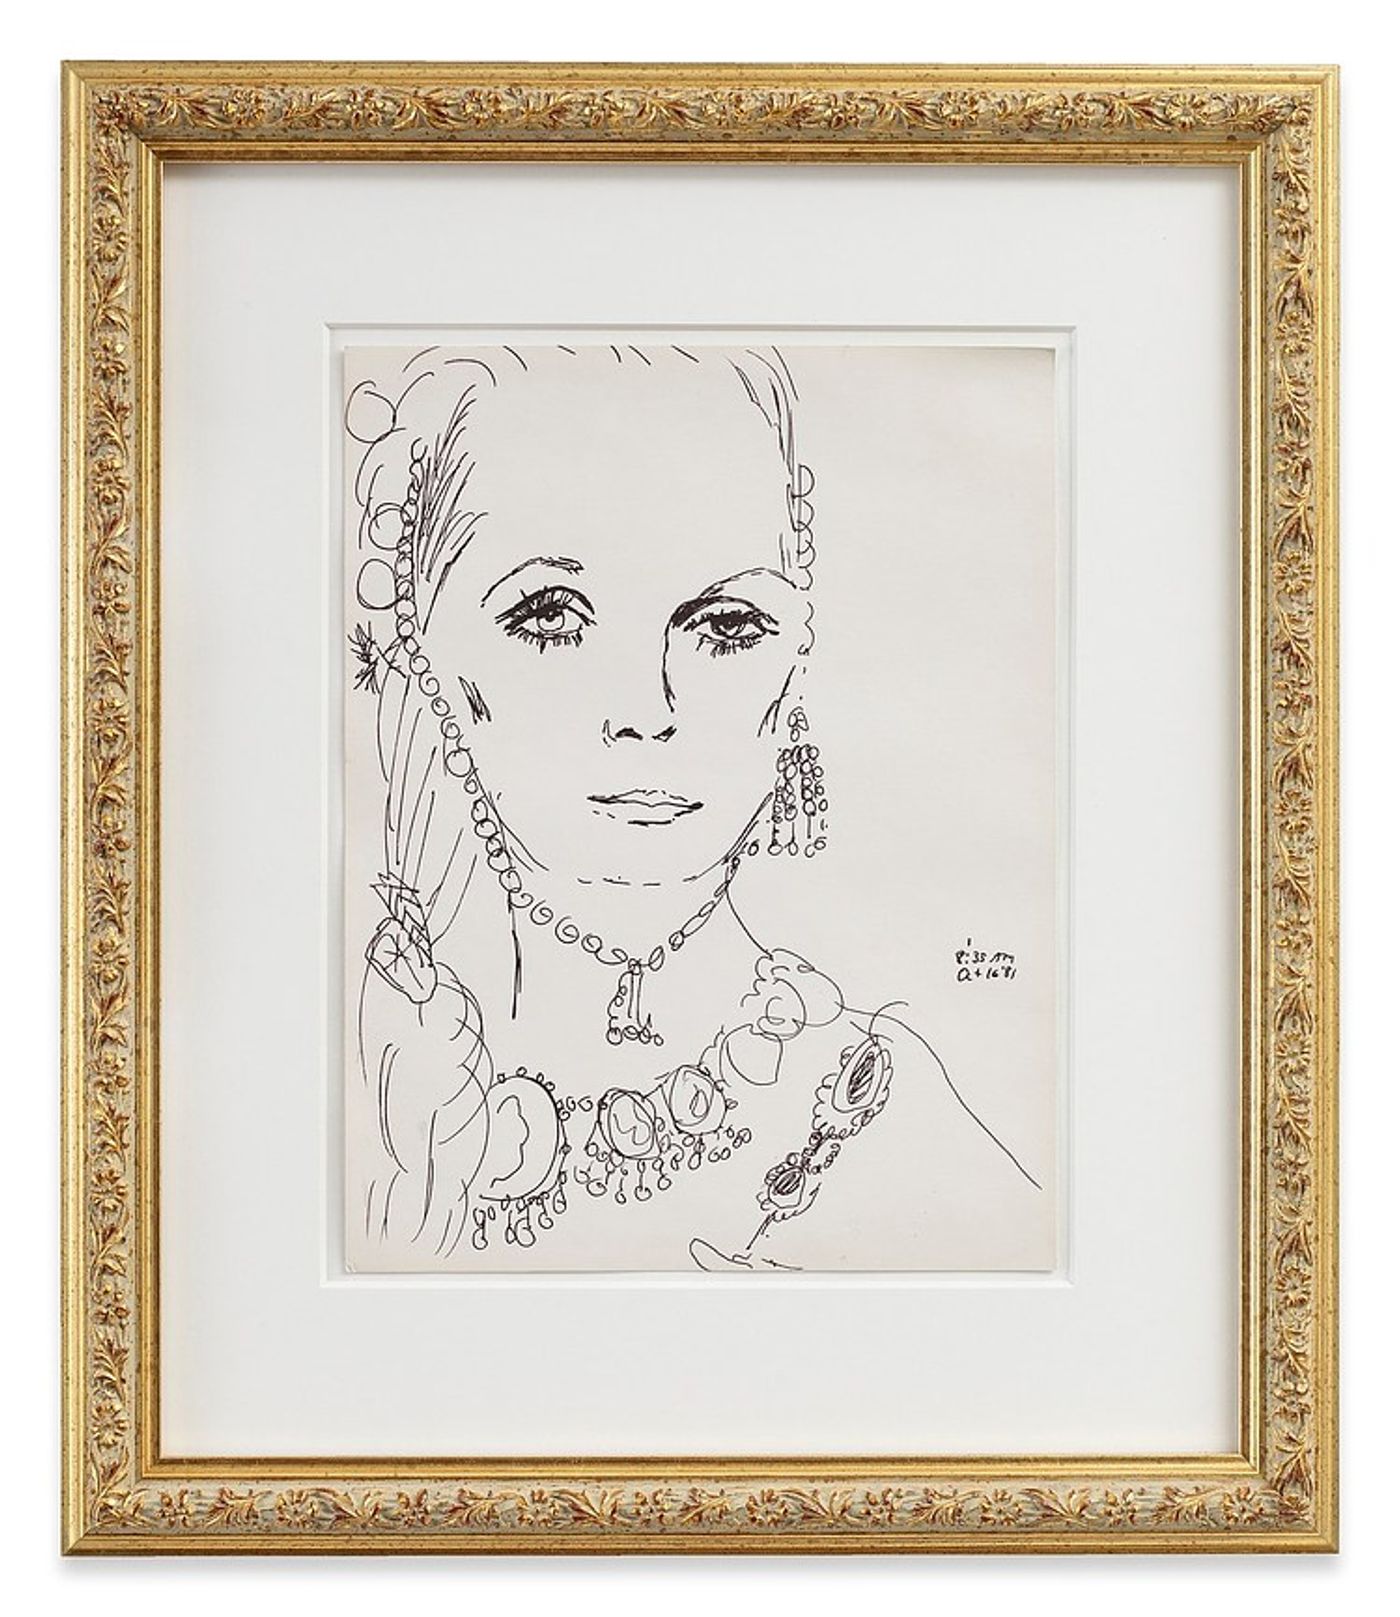 Karen Kilimnik, lots of jewelry + eyelashes - must be Elizabeth Taylor, 1981. Ink on paper, 11 x 8.5 in (27.9 × 21.6 cm).